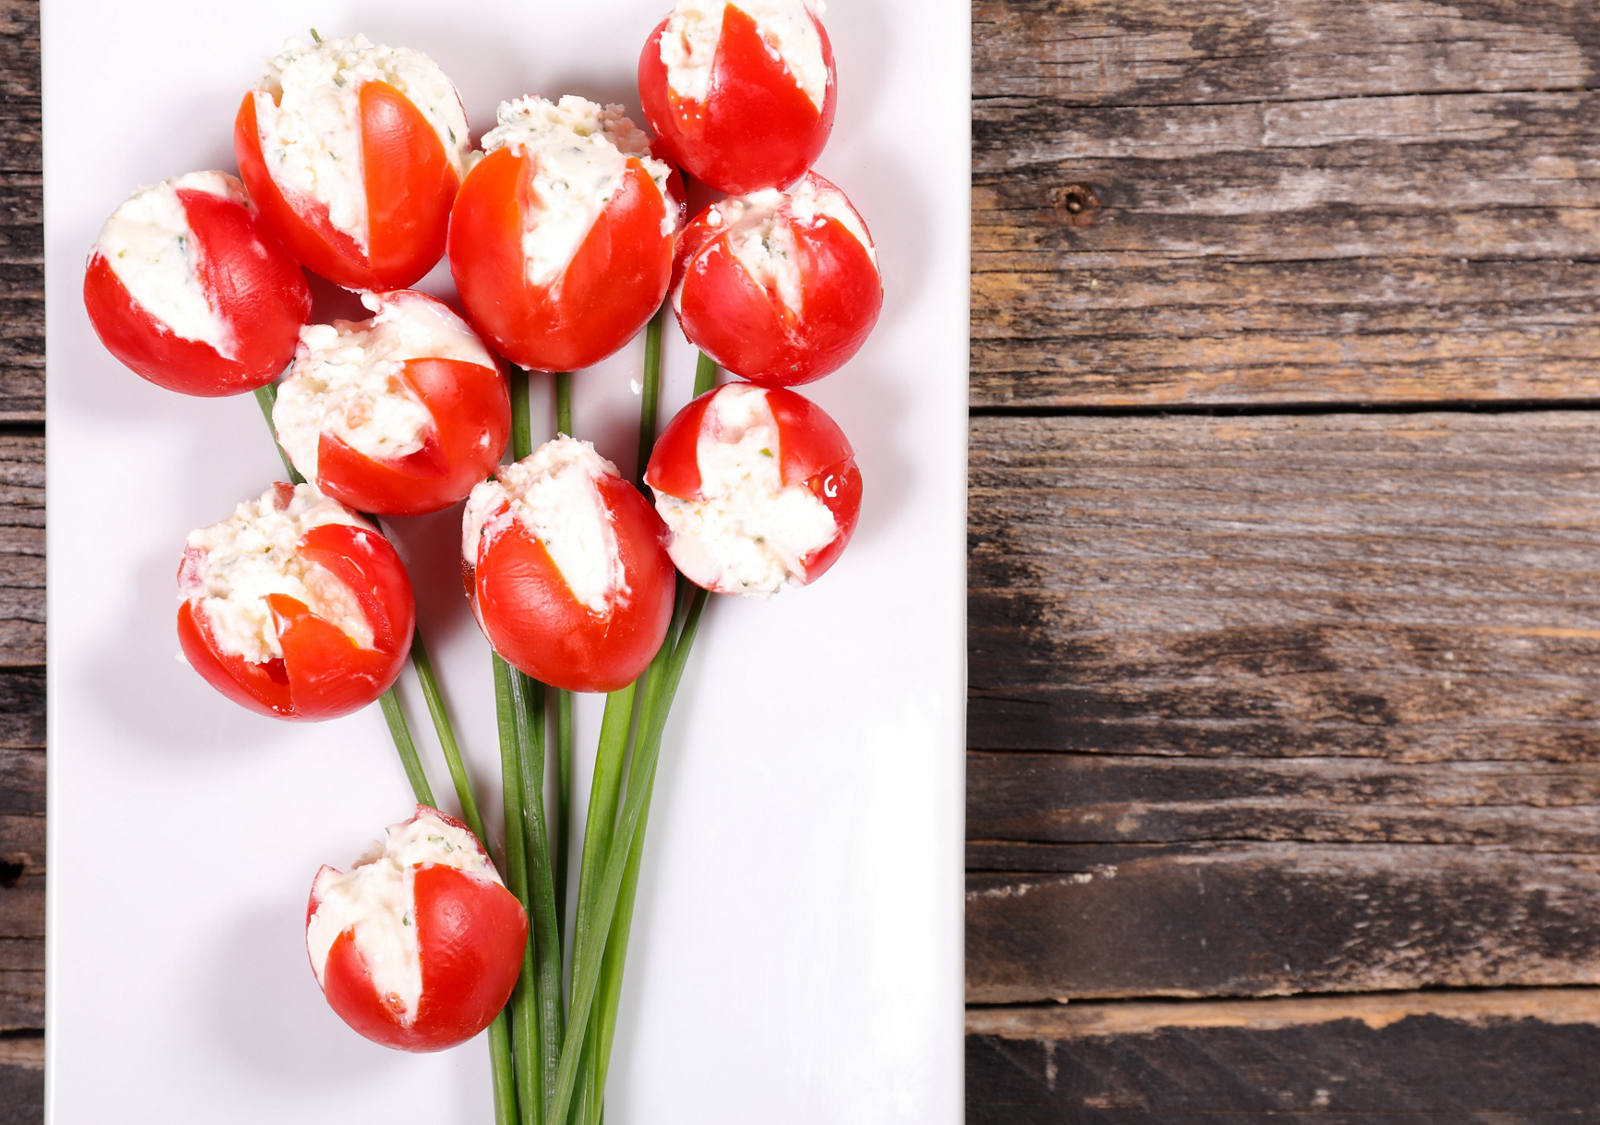 Cherry tomato tulips as edible table decoration 